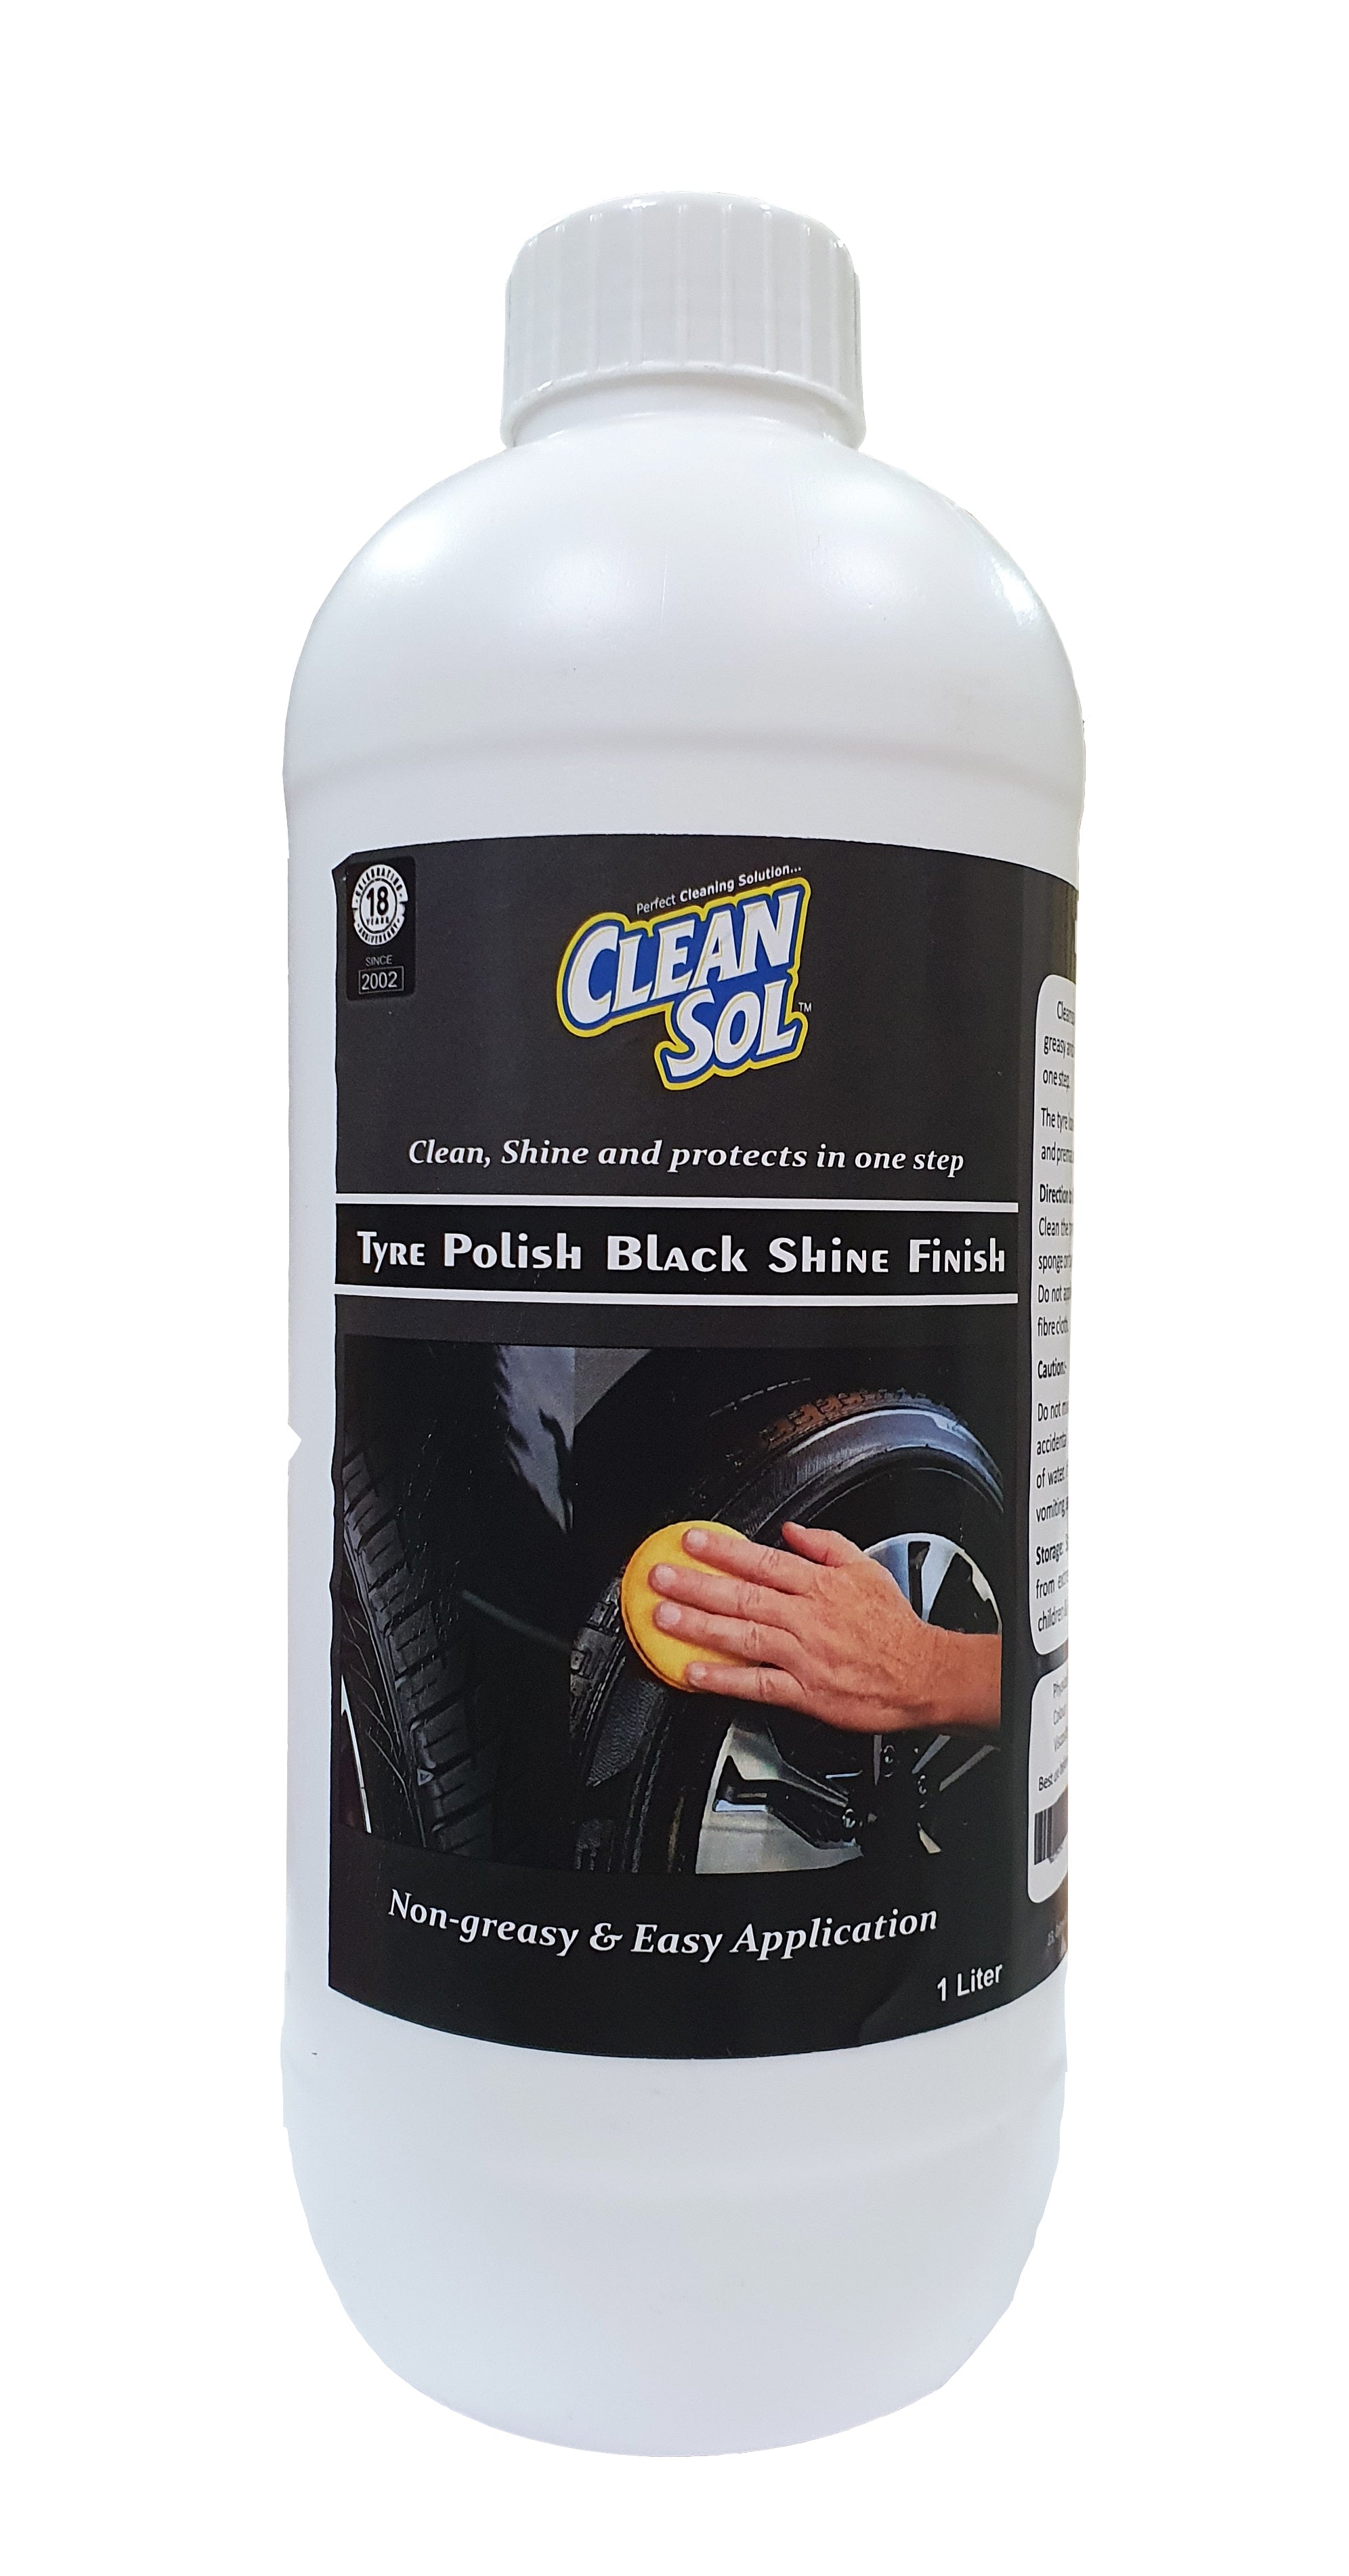 Cleansol Tyre Polish Black Shine Finish - 5 litre